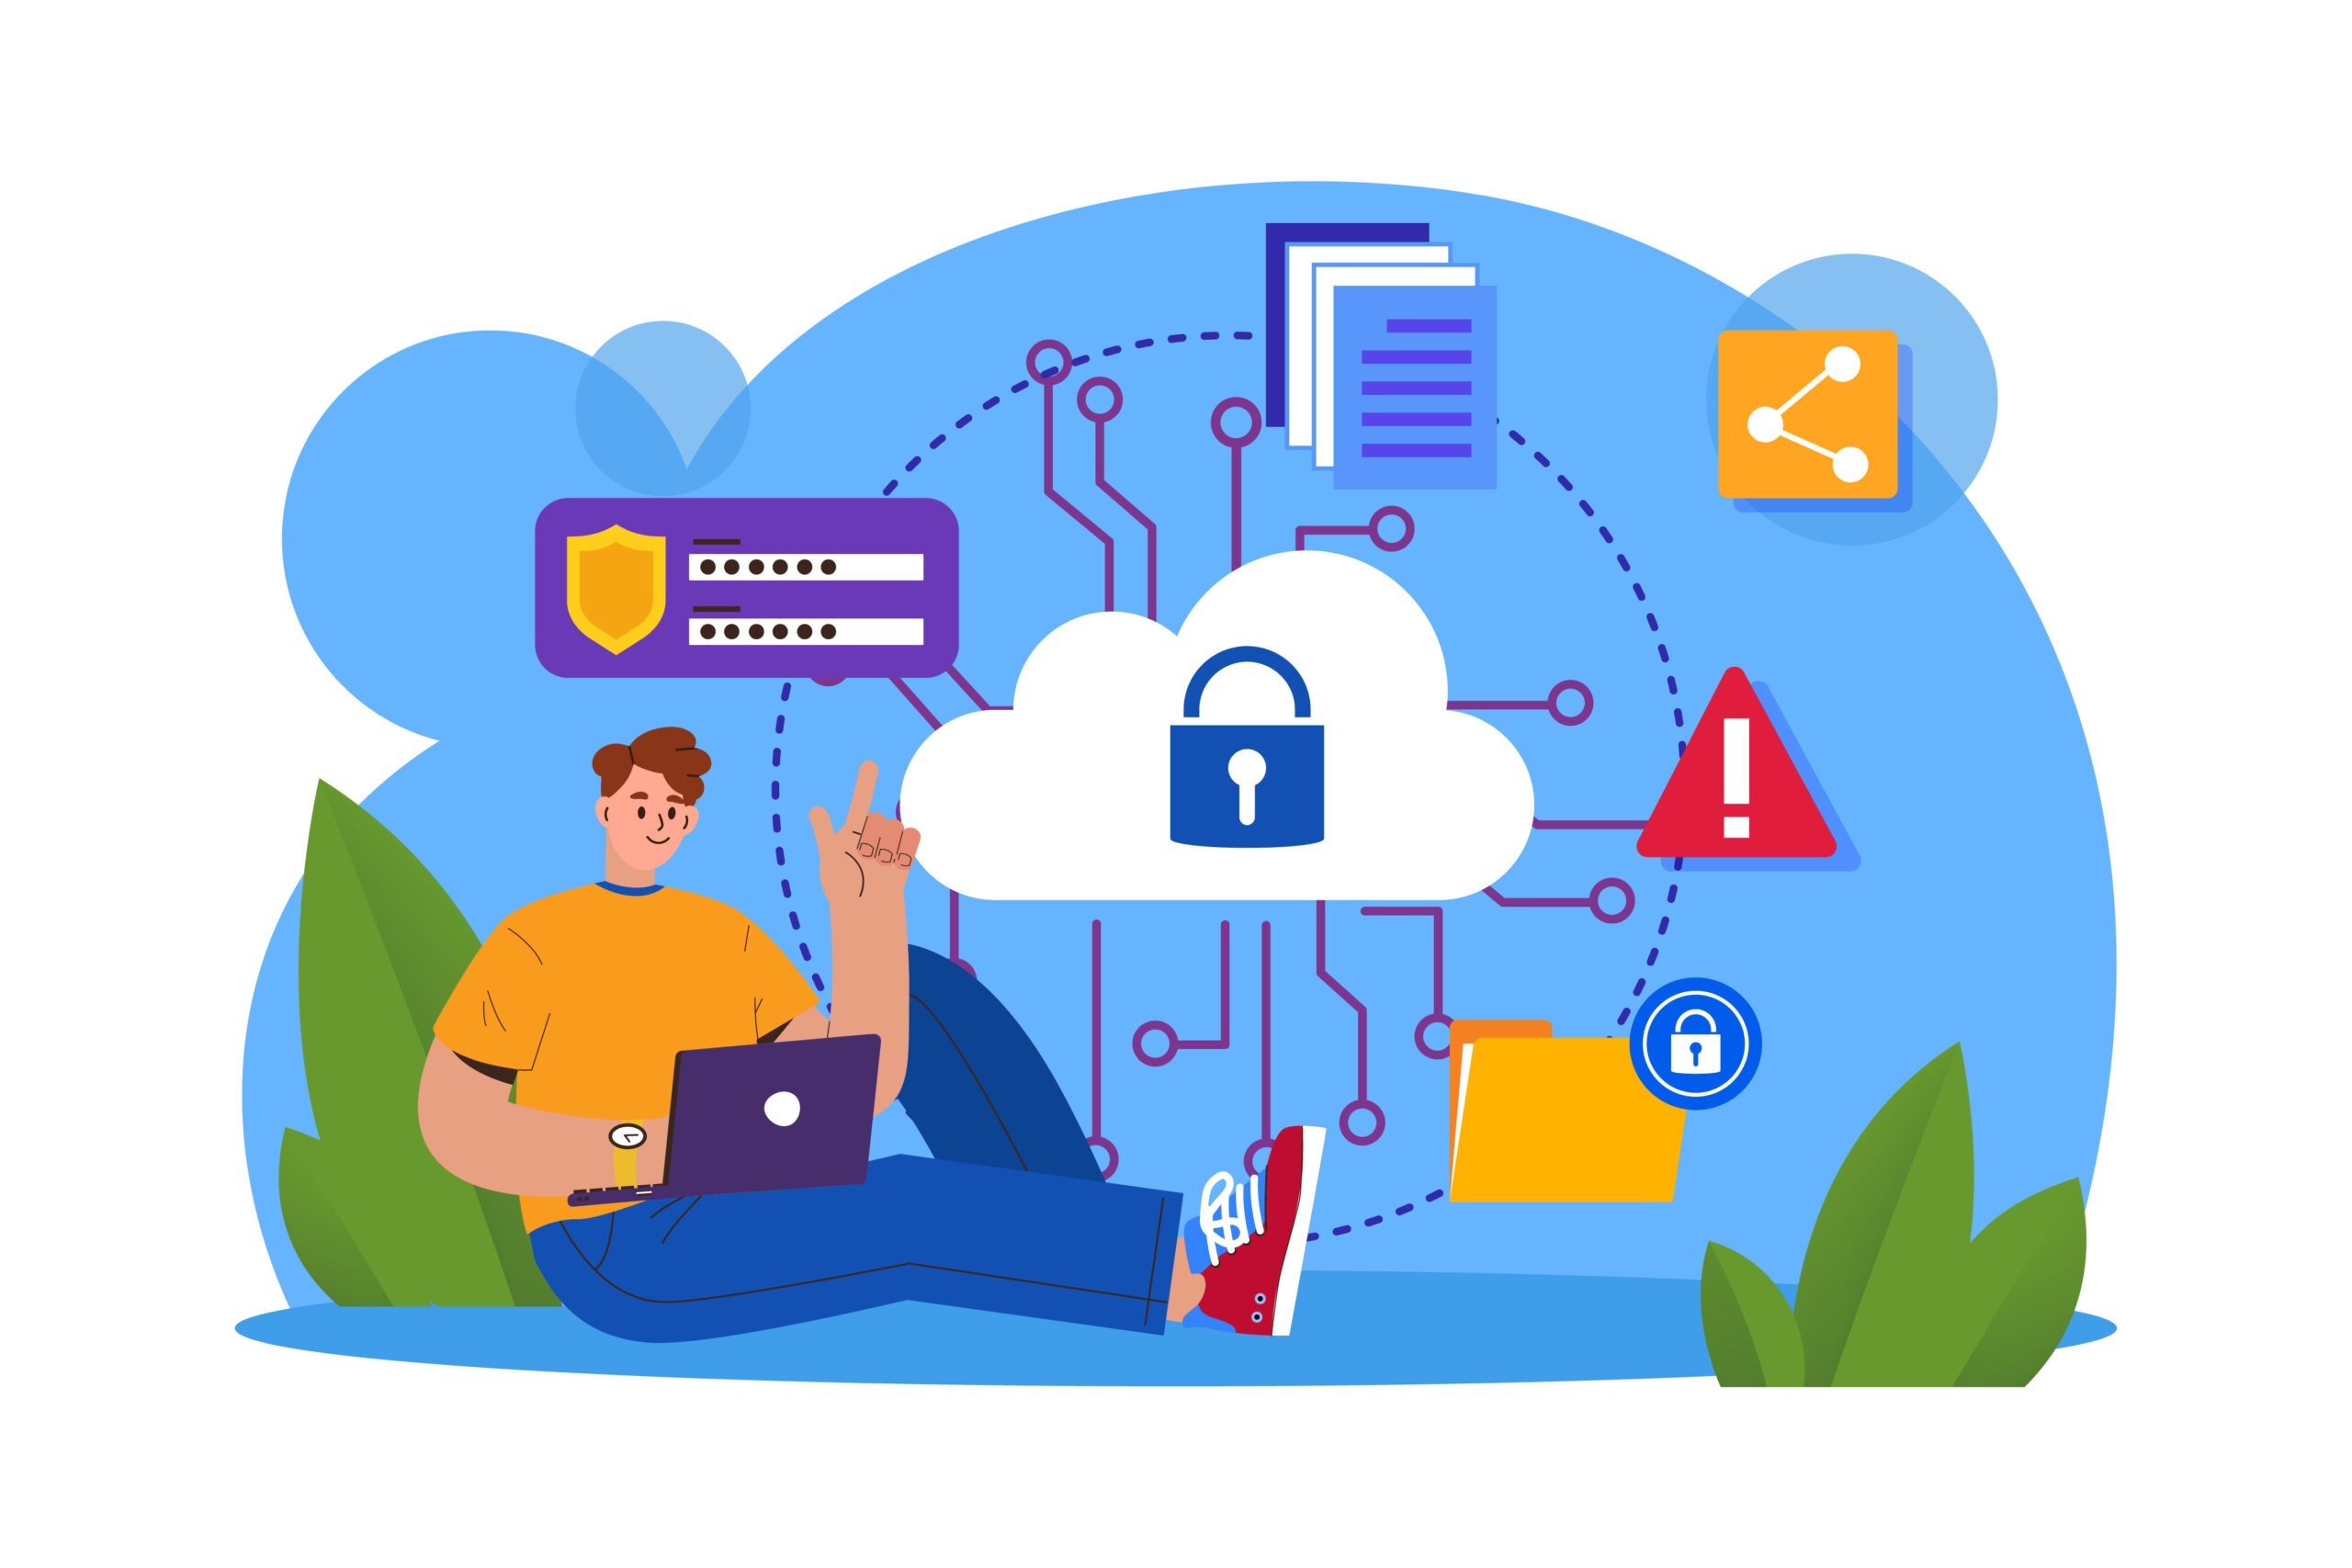 cloud data security